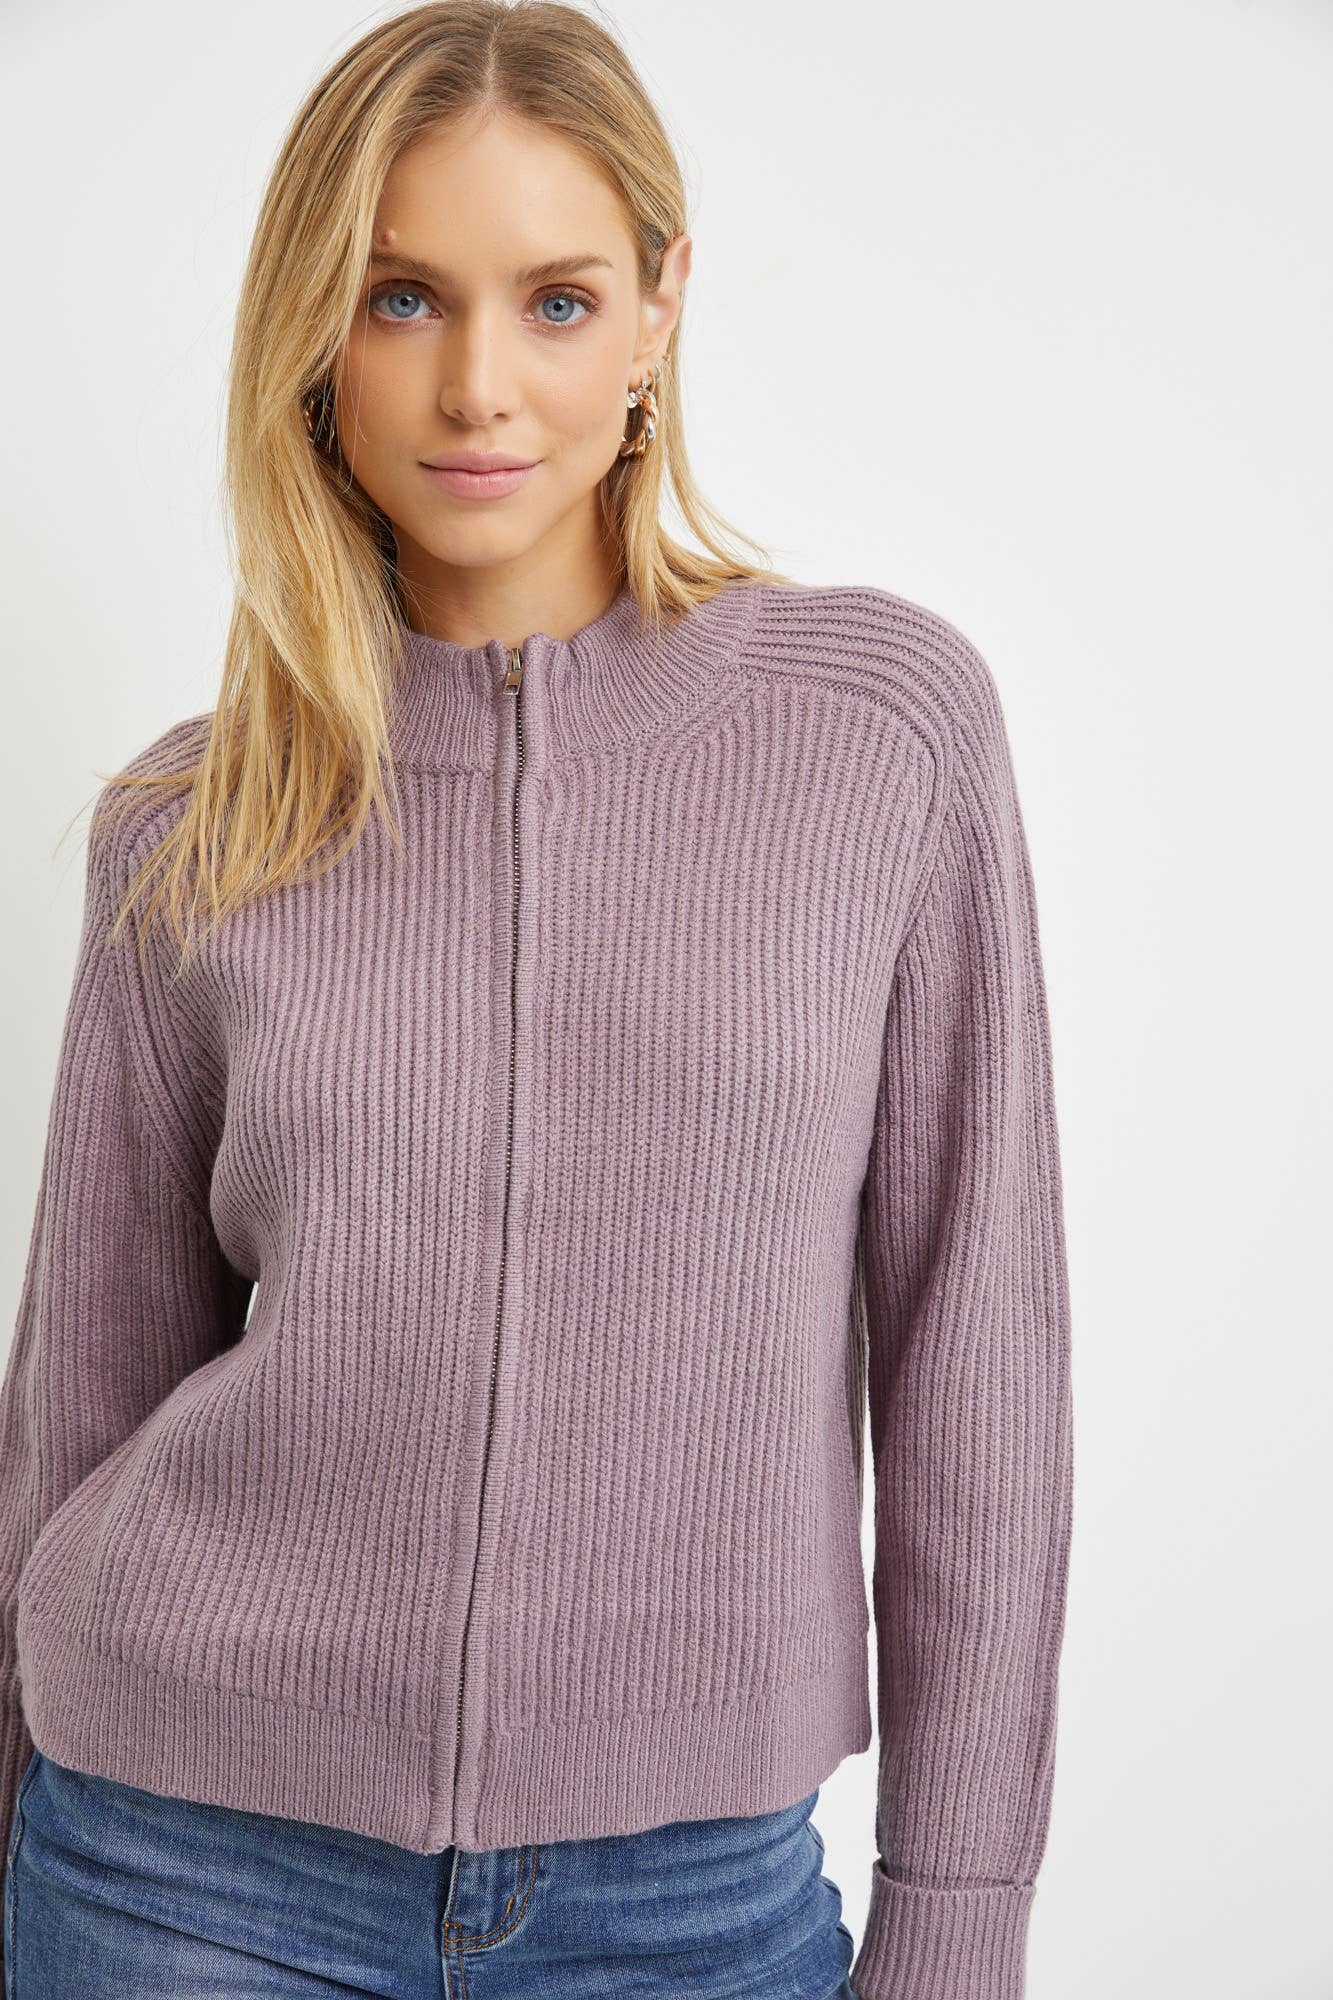 Zip Up Sweater Jacket: SM / Kale